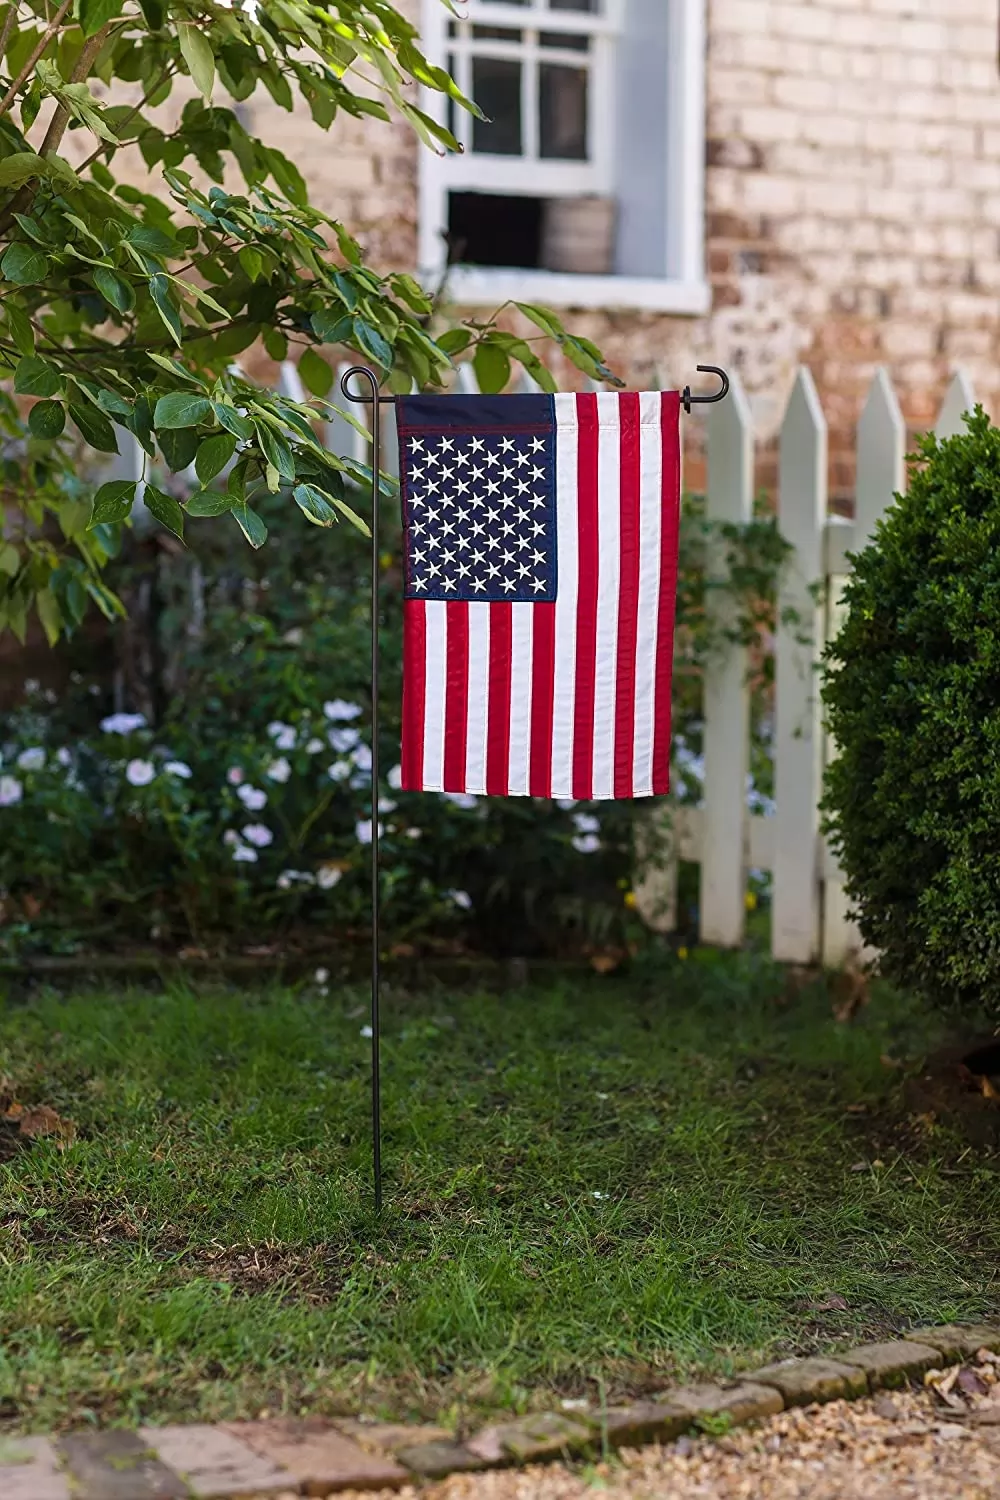 Homissor American Flag Garden Size Applique Flag - 12.5 x 18 Inches Outdoor Patriotic Americana Decor for Homes and Gardens